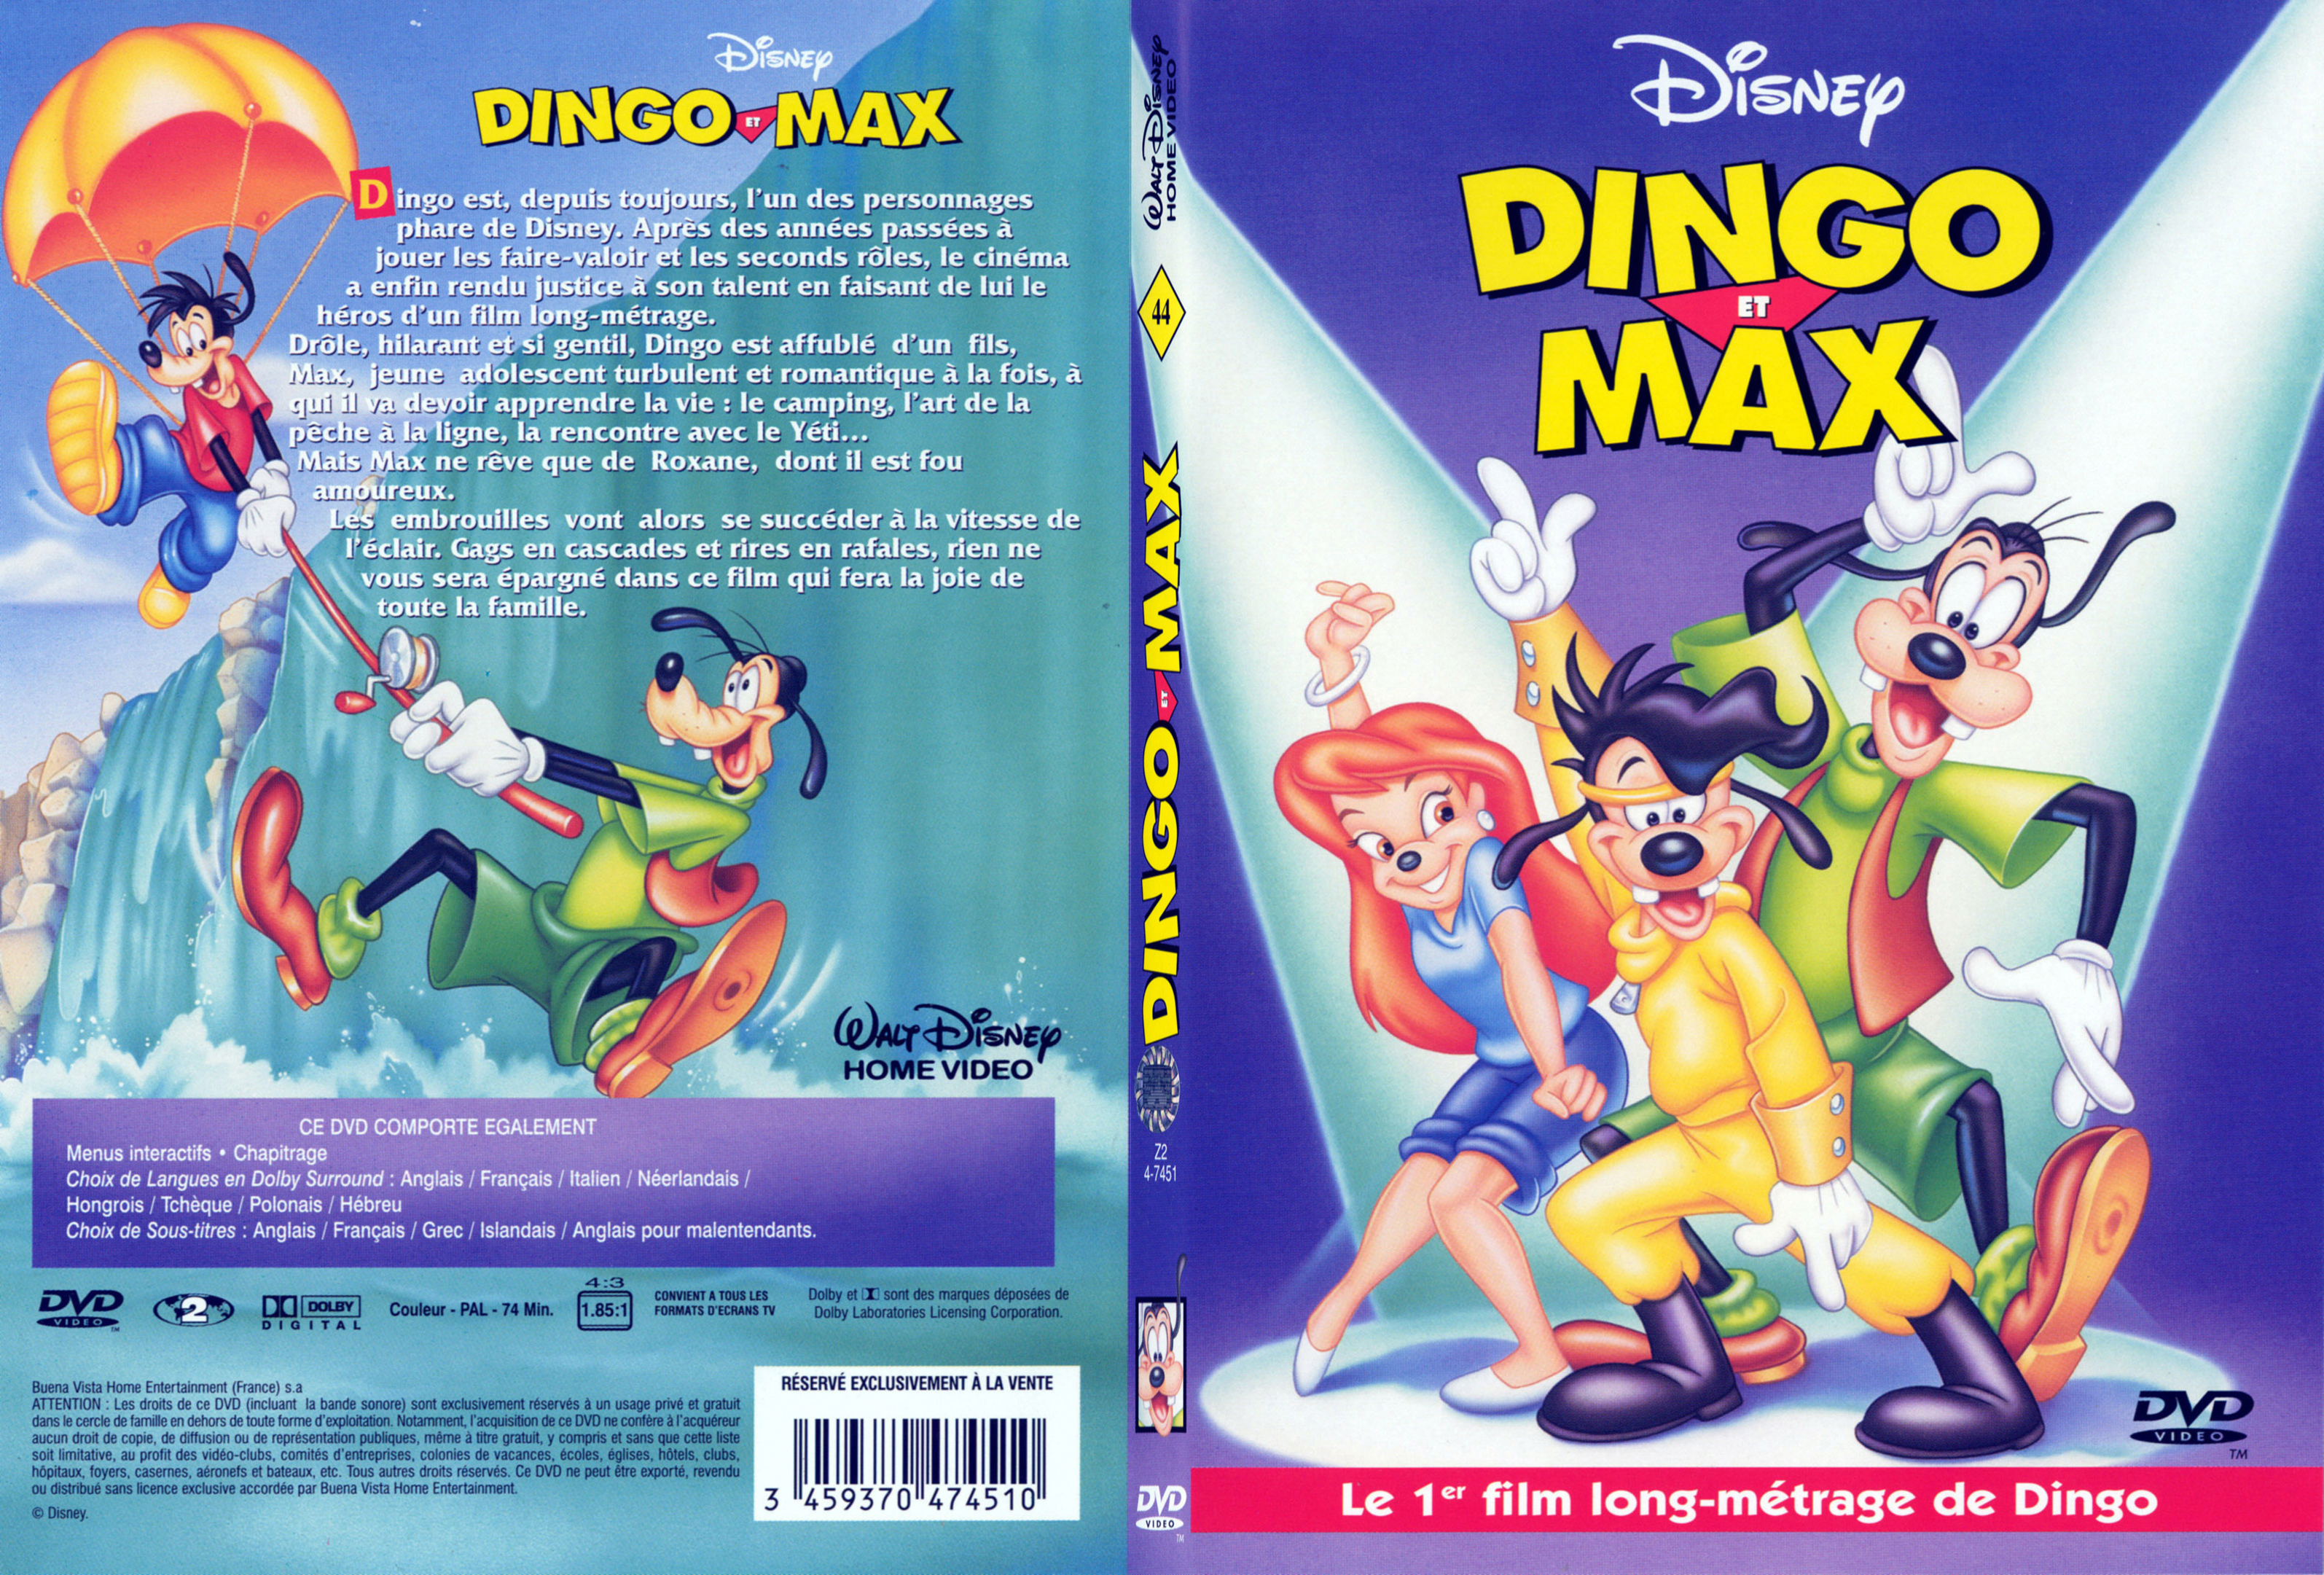 Jaquette DVD Dingo et Max - SLIM v2